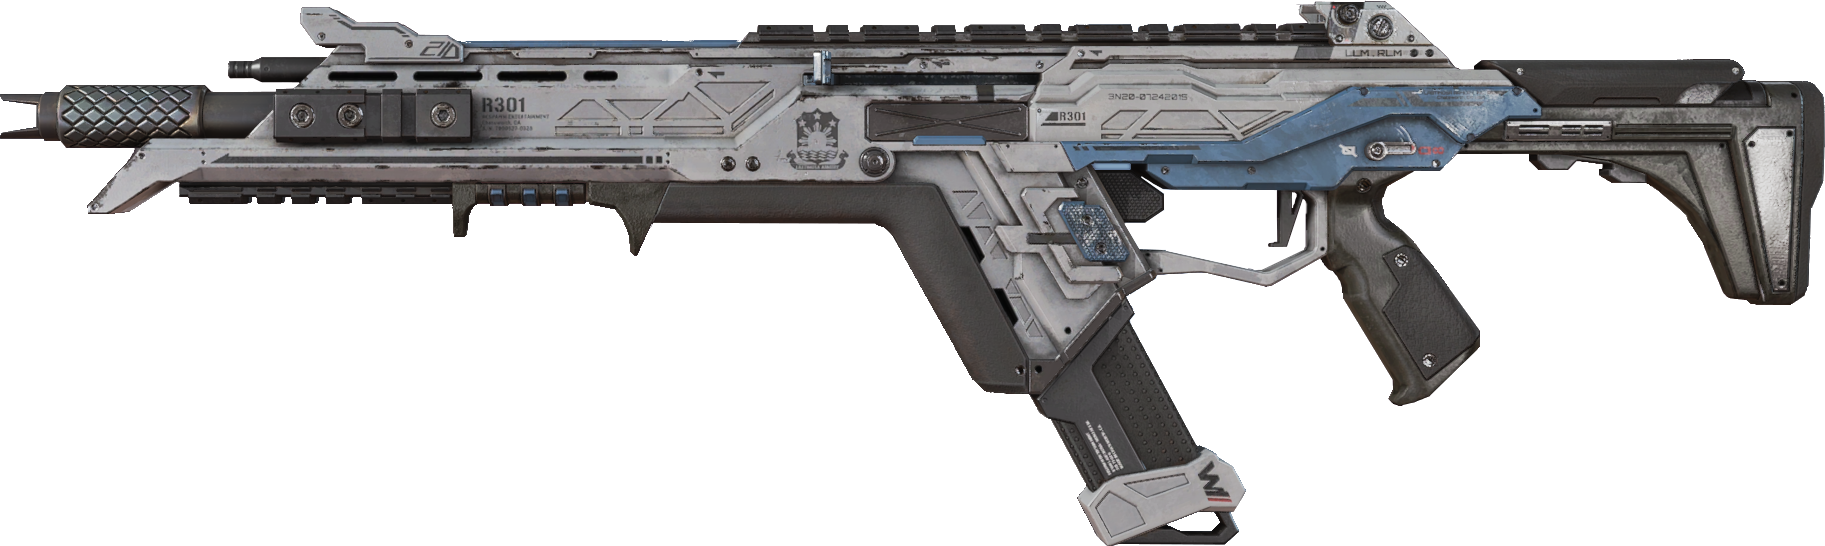 R-301 Carbine - Apex Legends Wiki